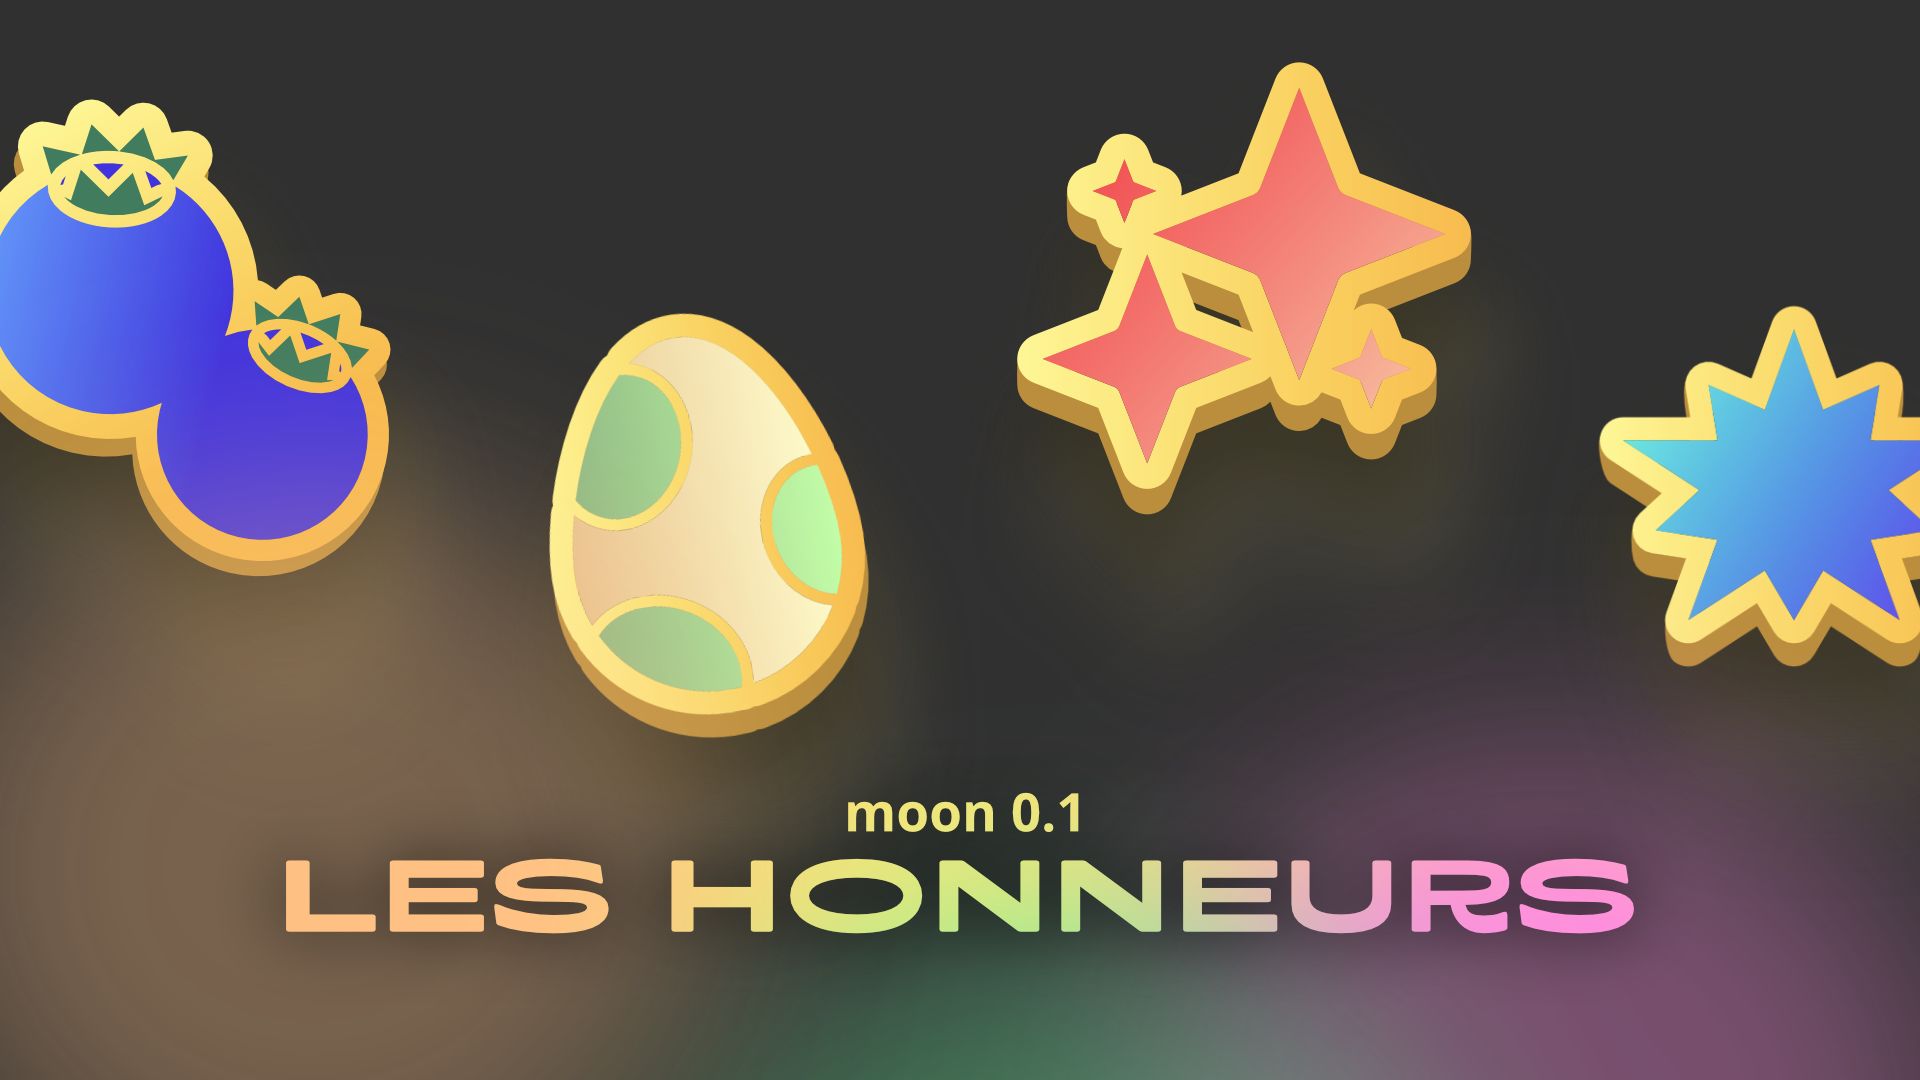 Moon 0.1 - Les honneurs